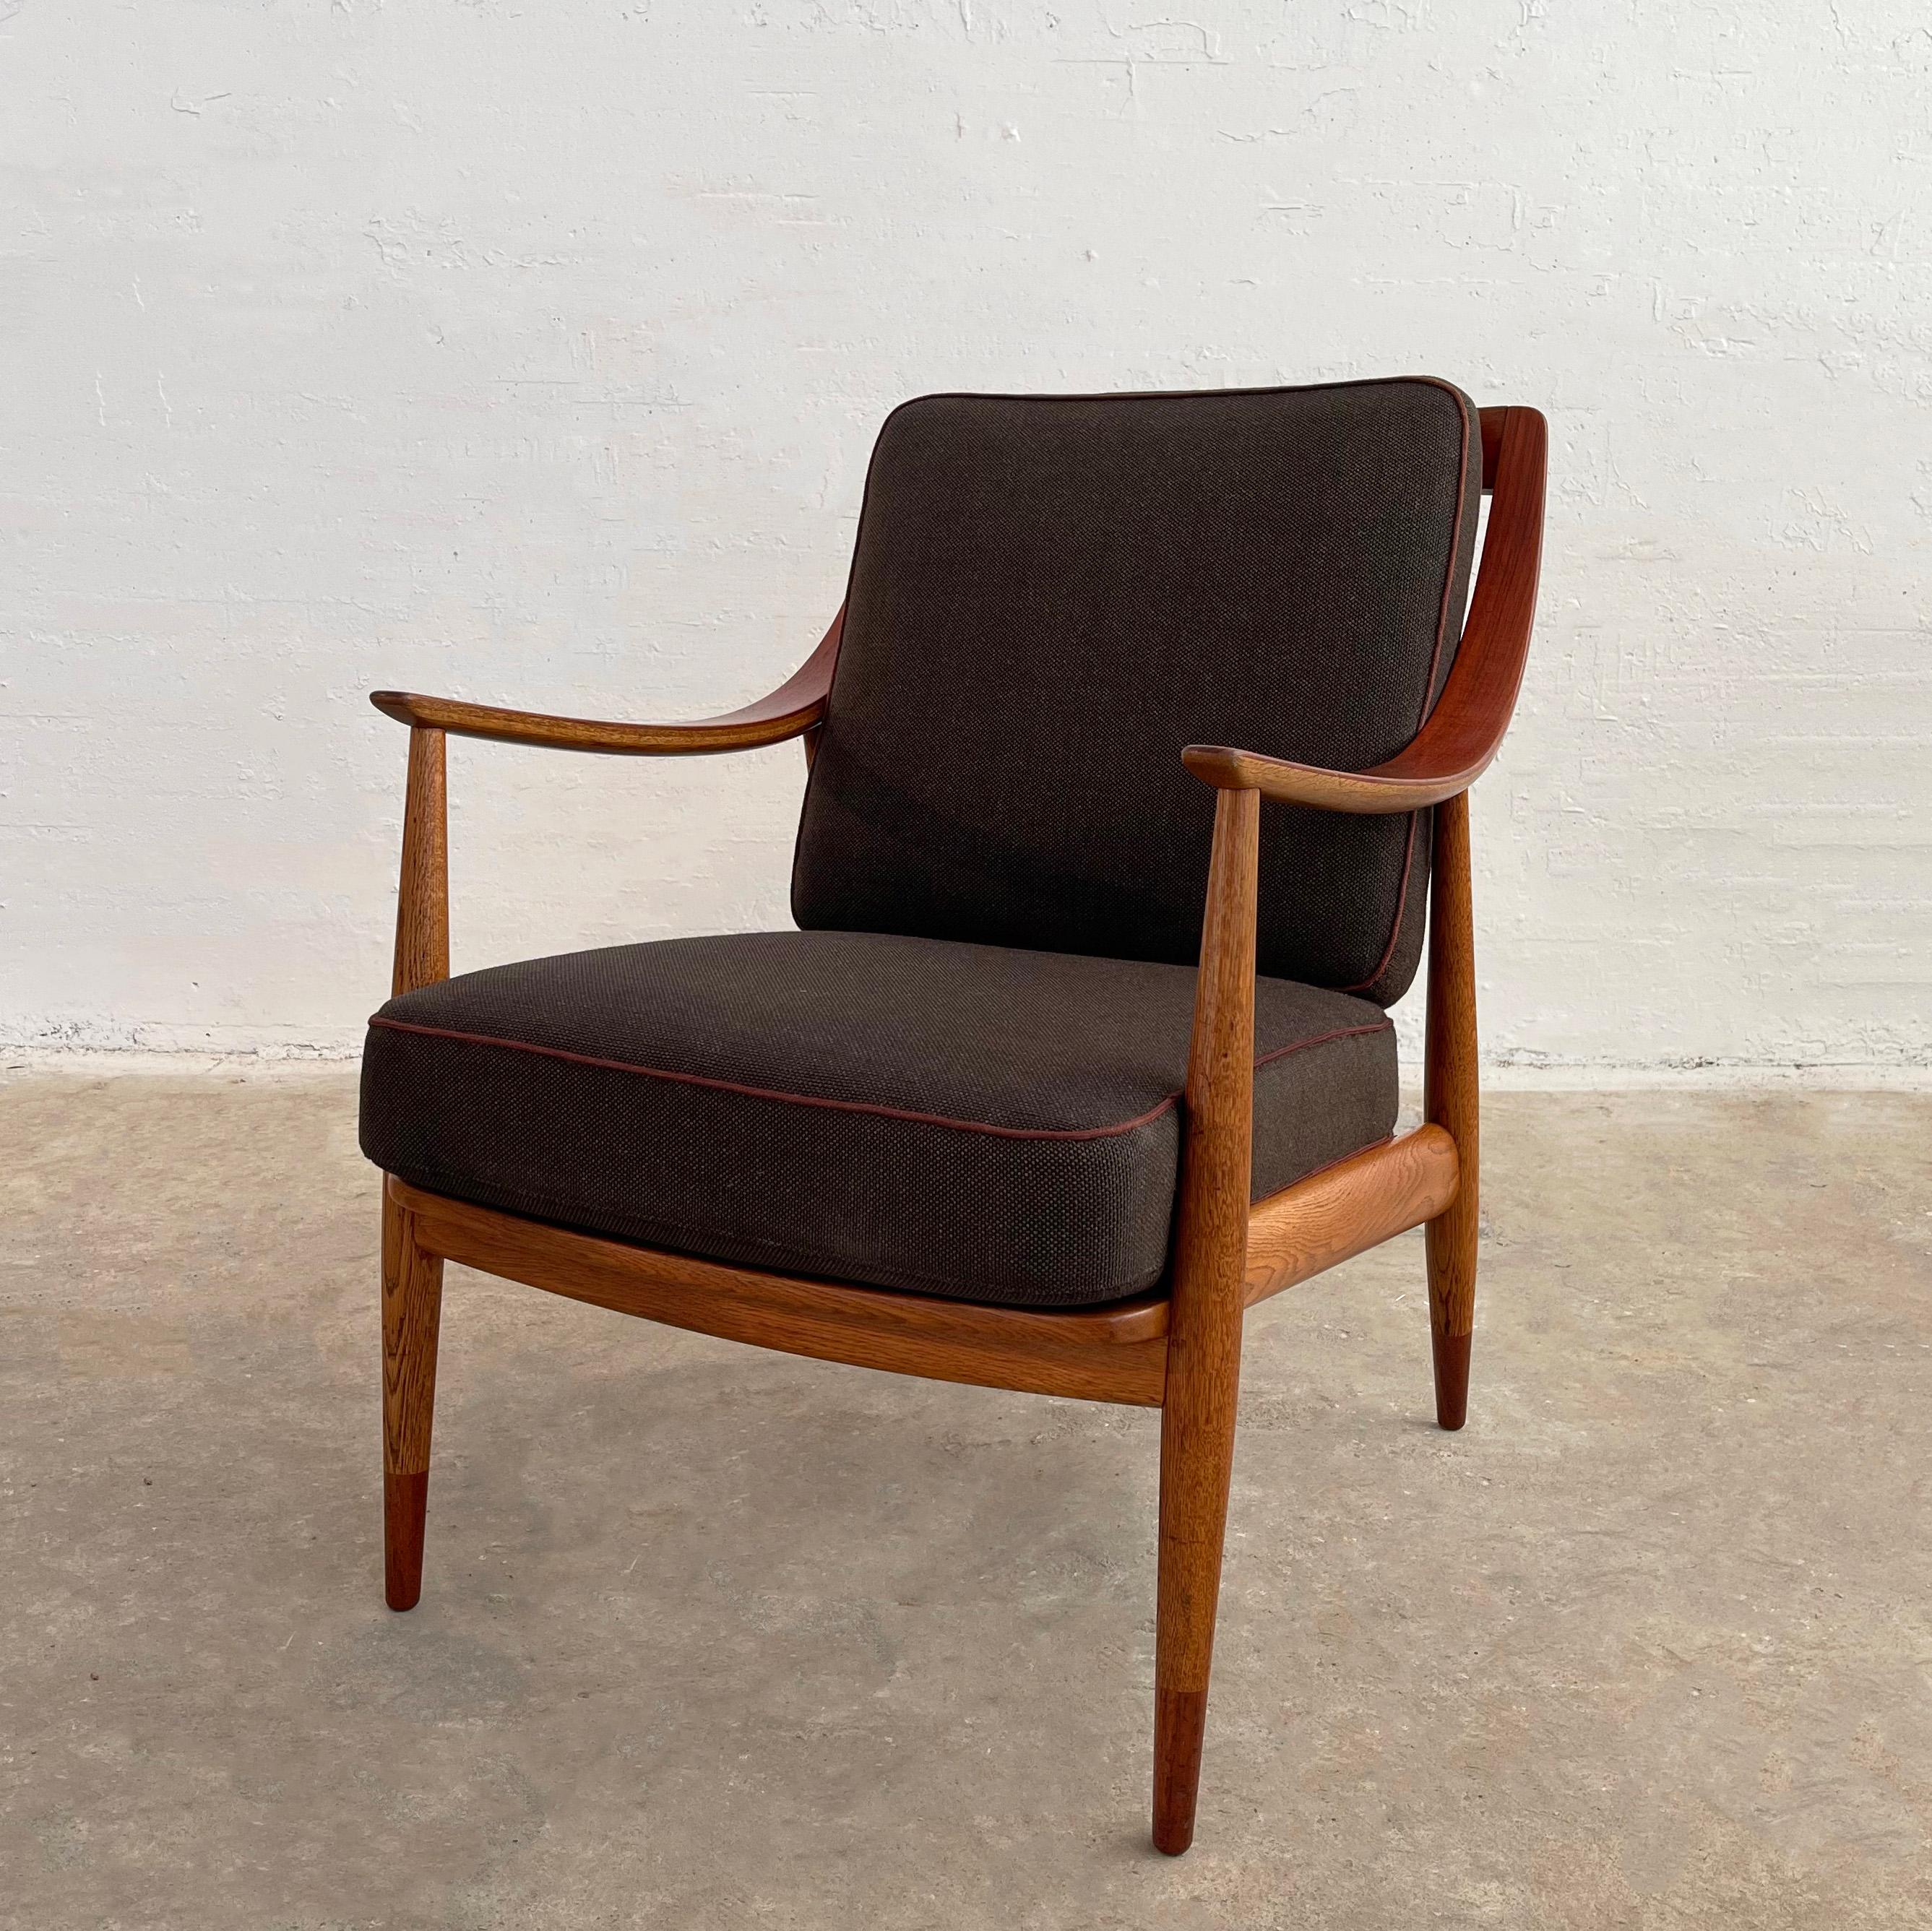 Danish Scandinavian Modern Scoop Lounge Chair By Peter Hvidt And Orla Molgaard-Nielsen For Sale